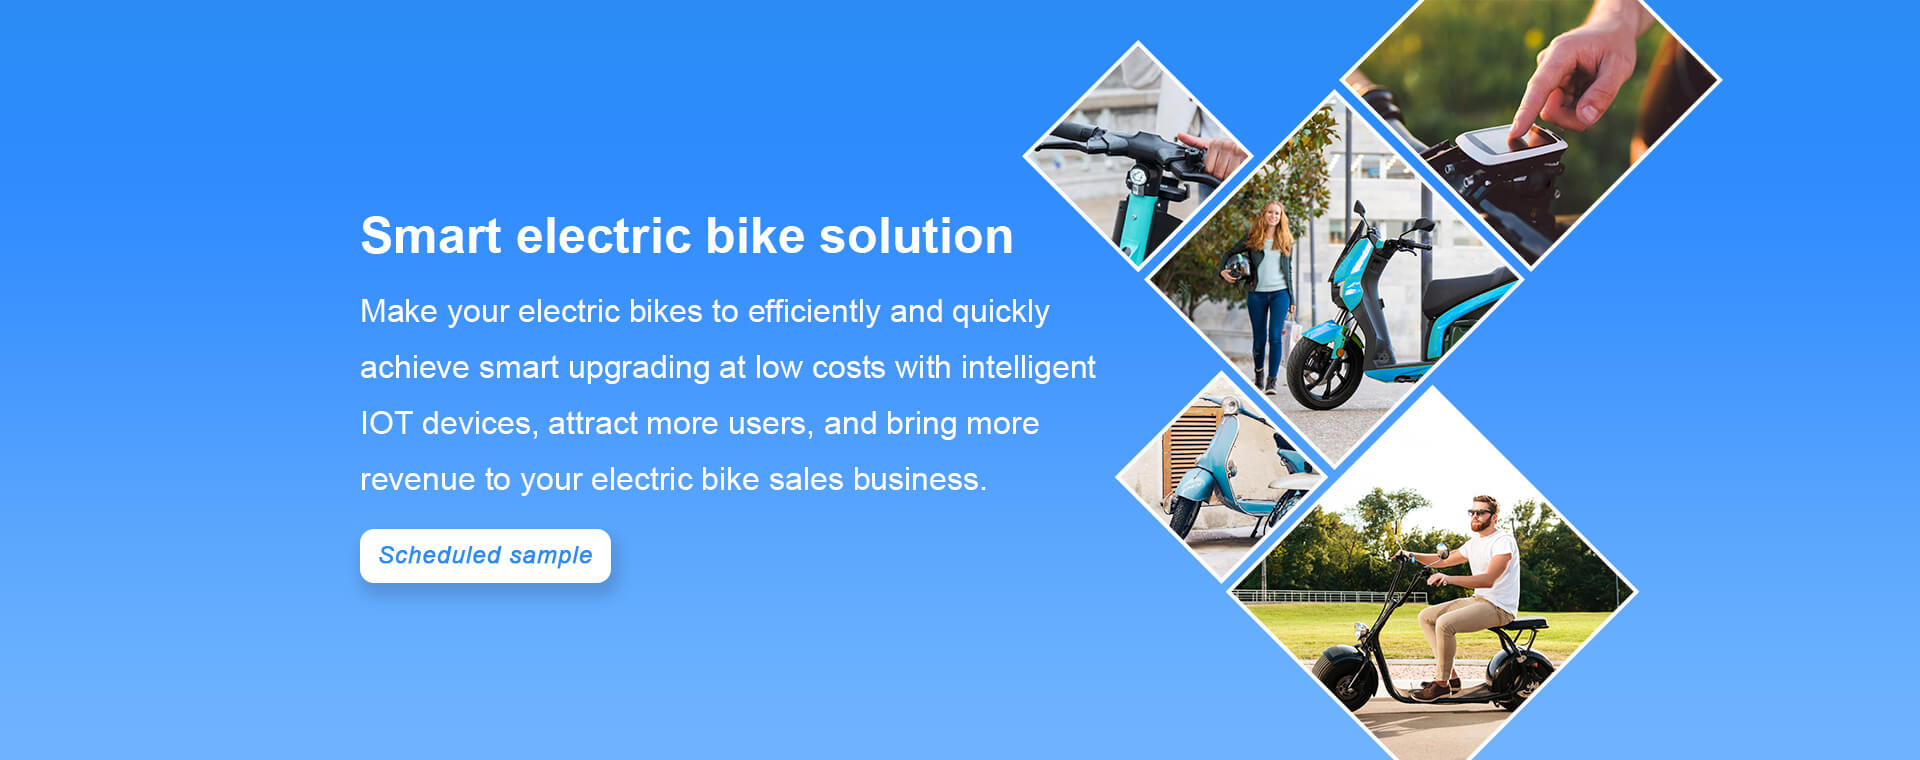 akıllı elektrikli bisiklet